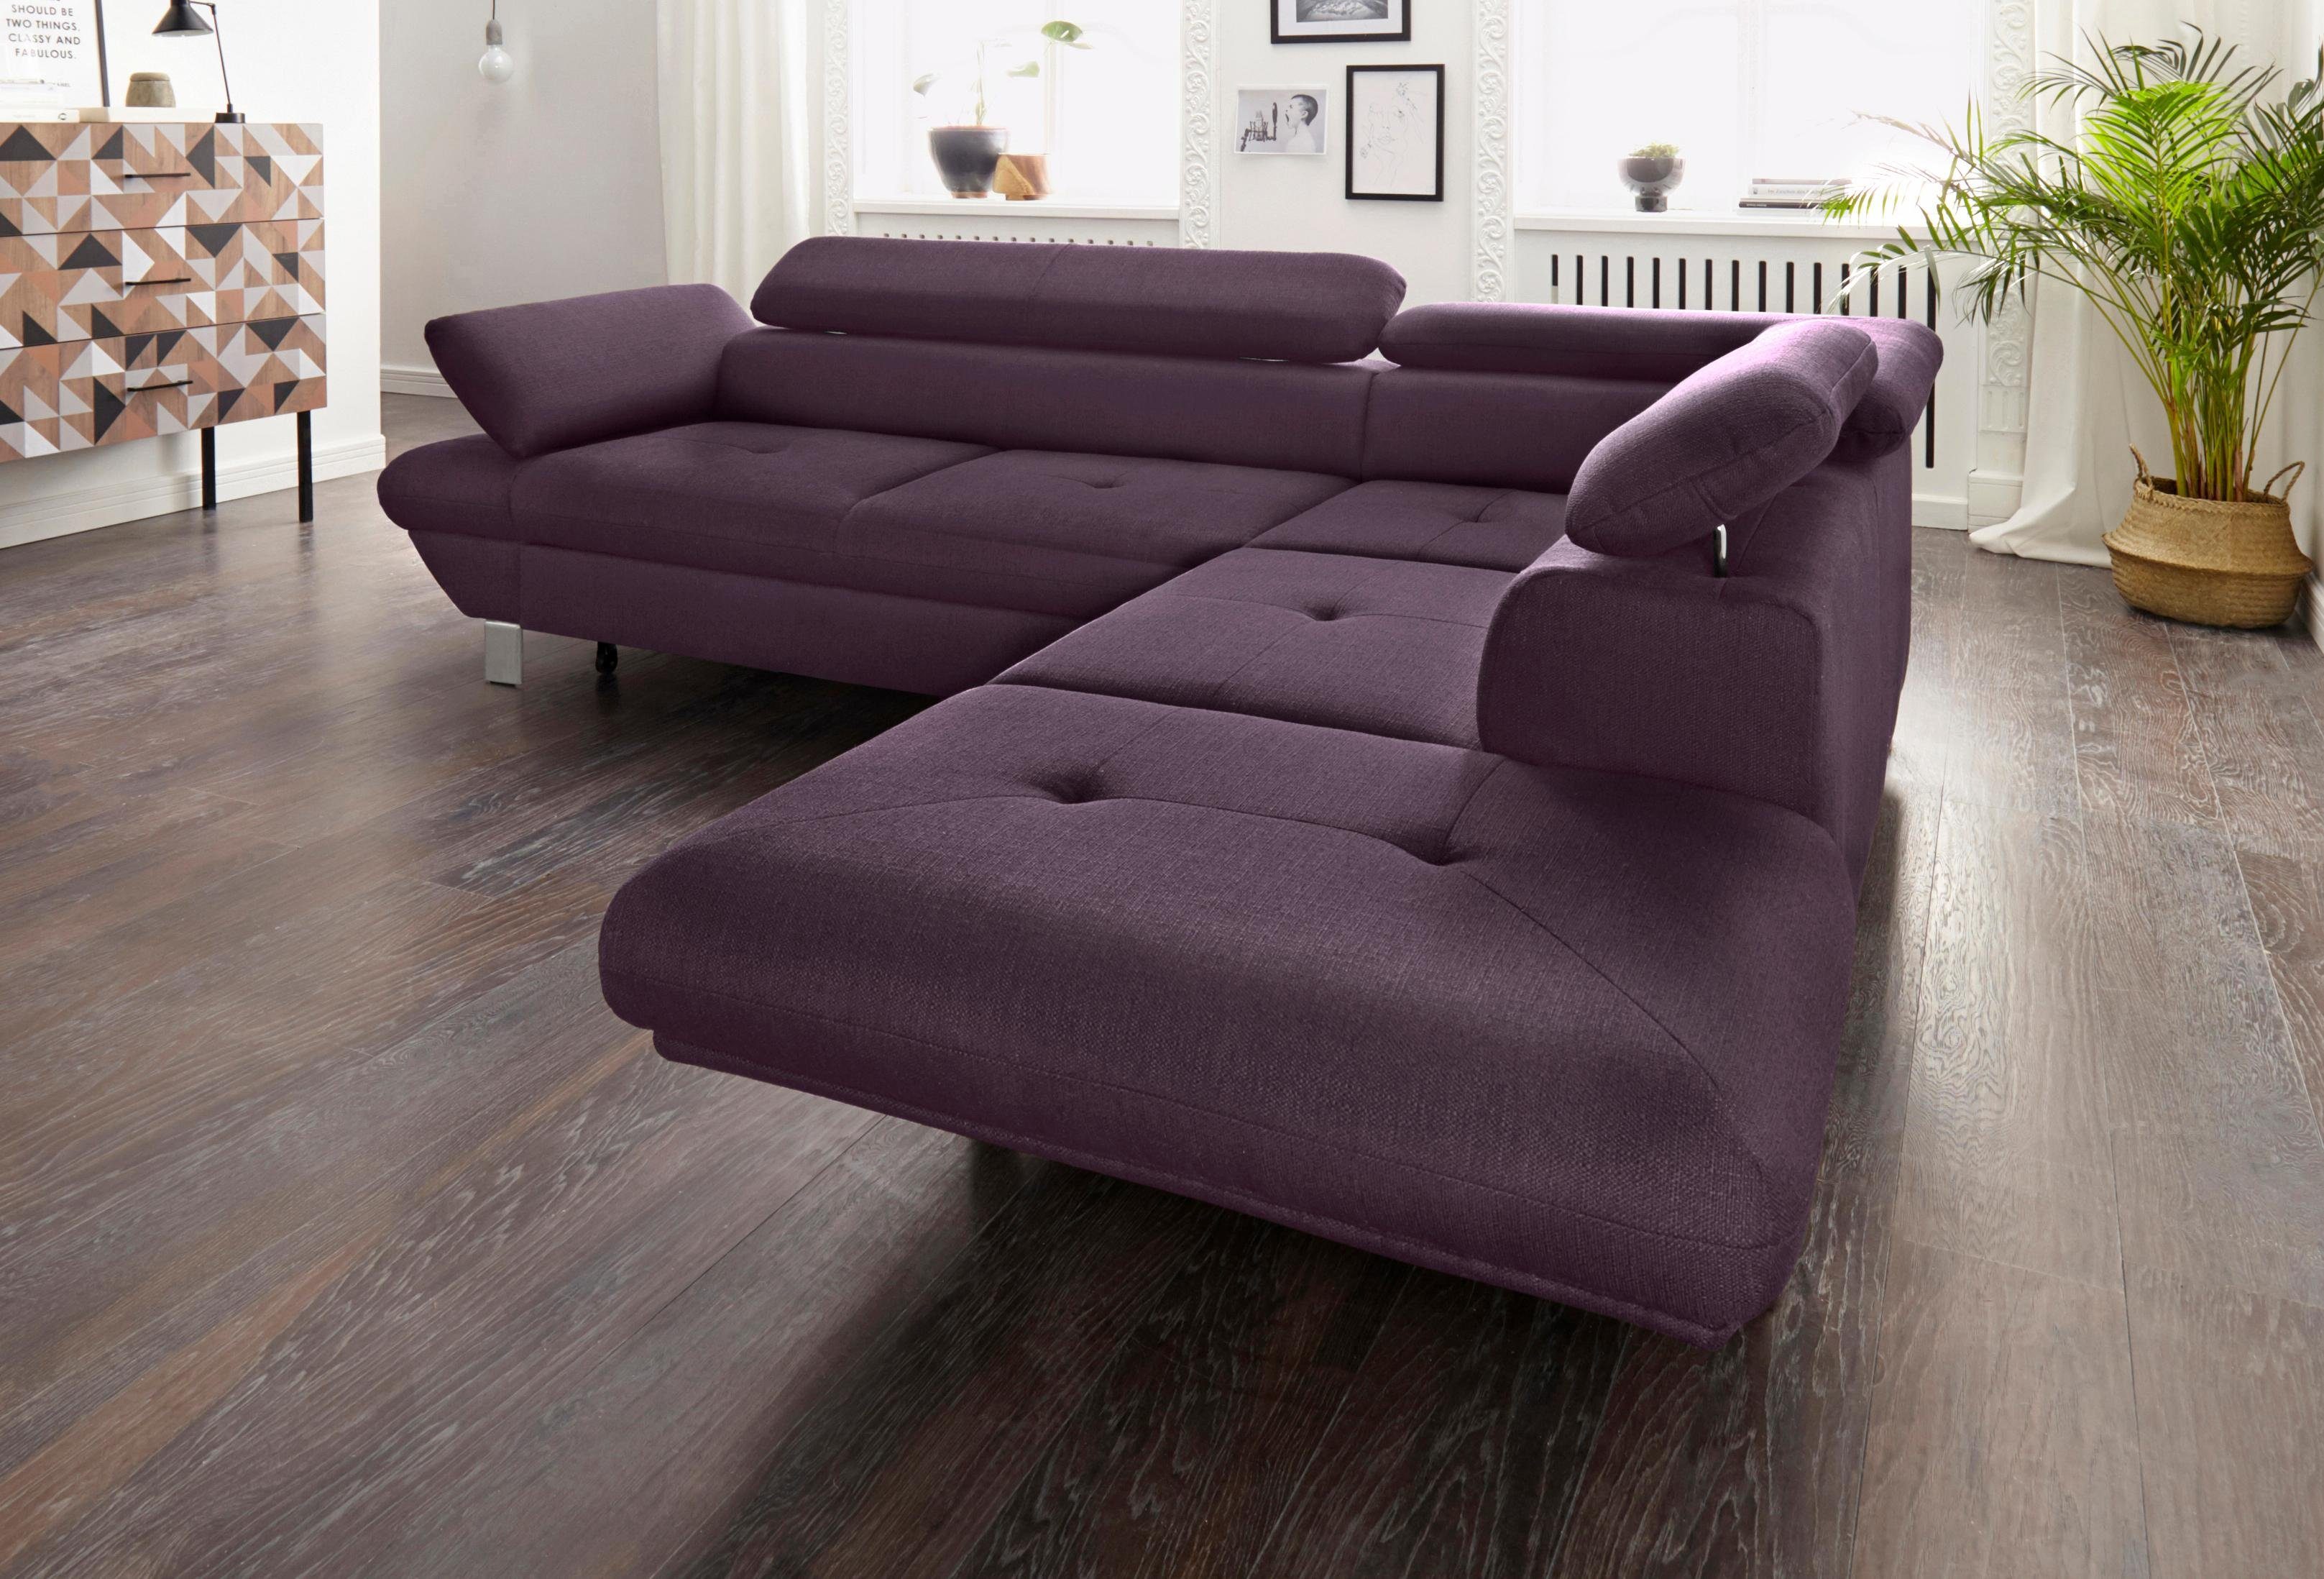 exxpo - sofa fashion Ecksofa Vinci, L-Form, wahlweise mit Bettfunktion